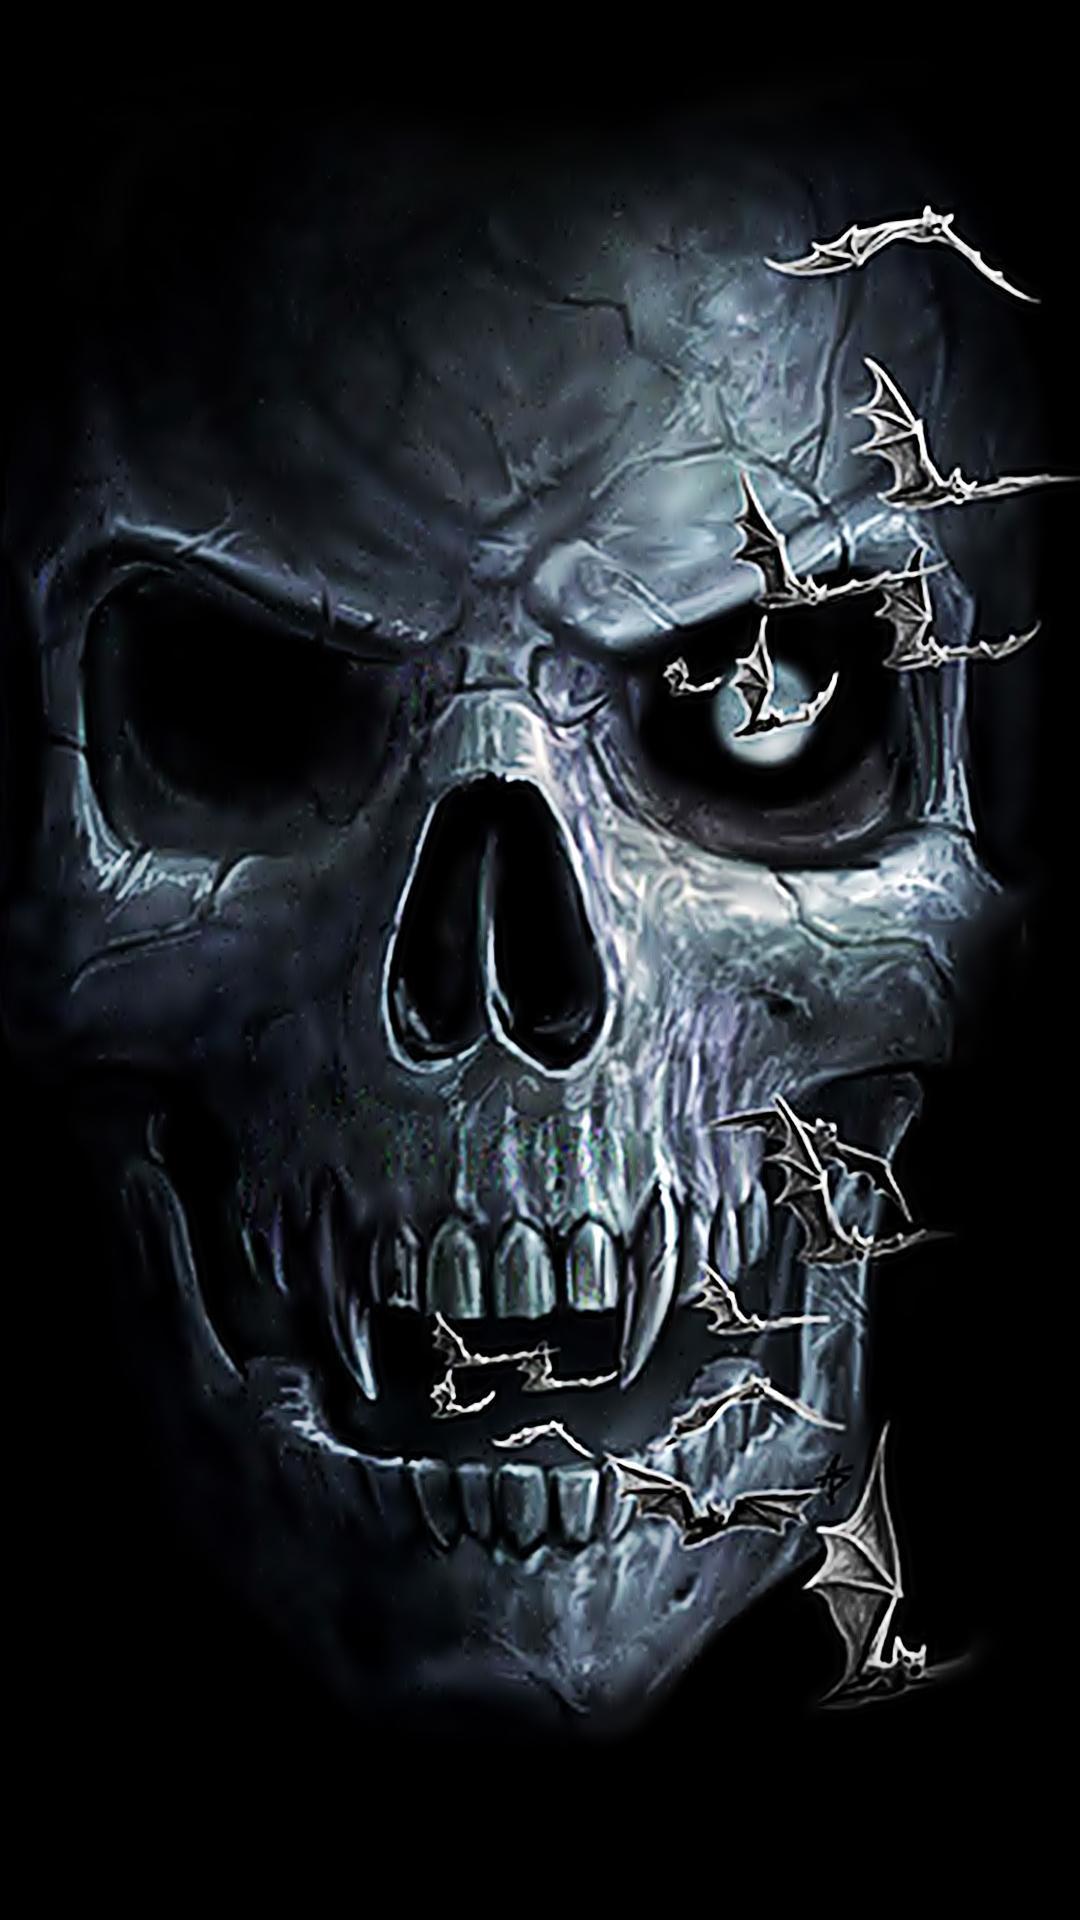 Skull 4K Wallpaper for Android - APK Download